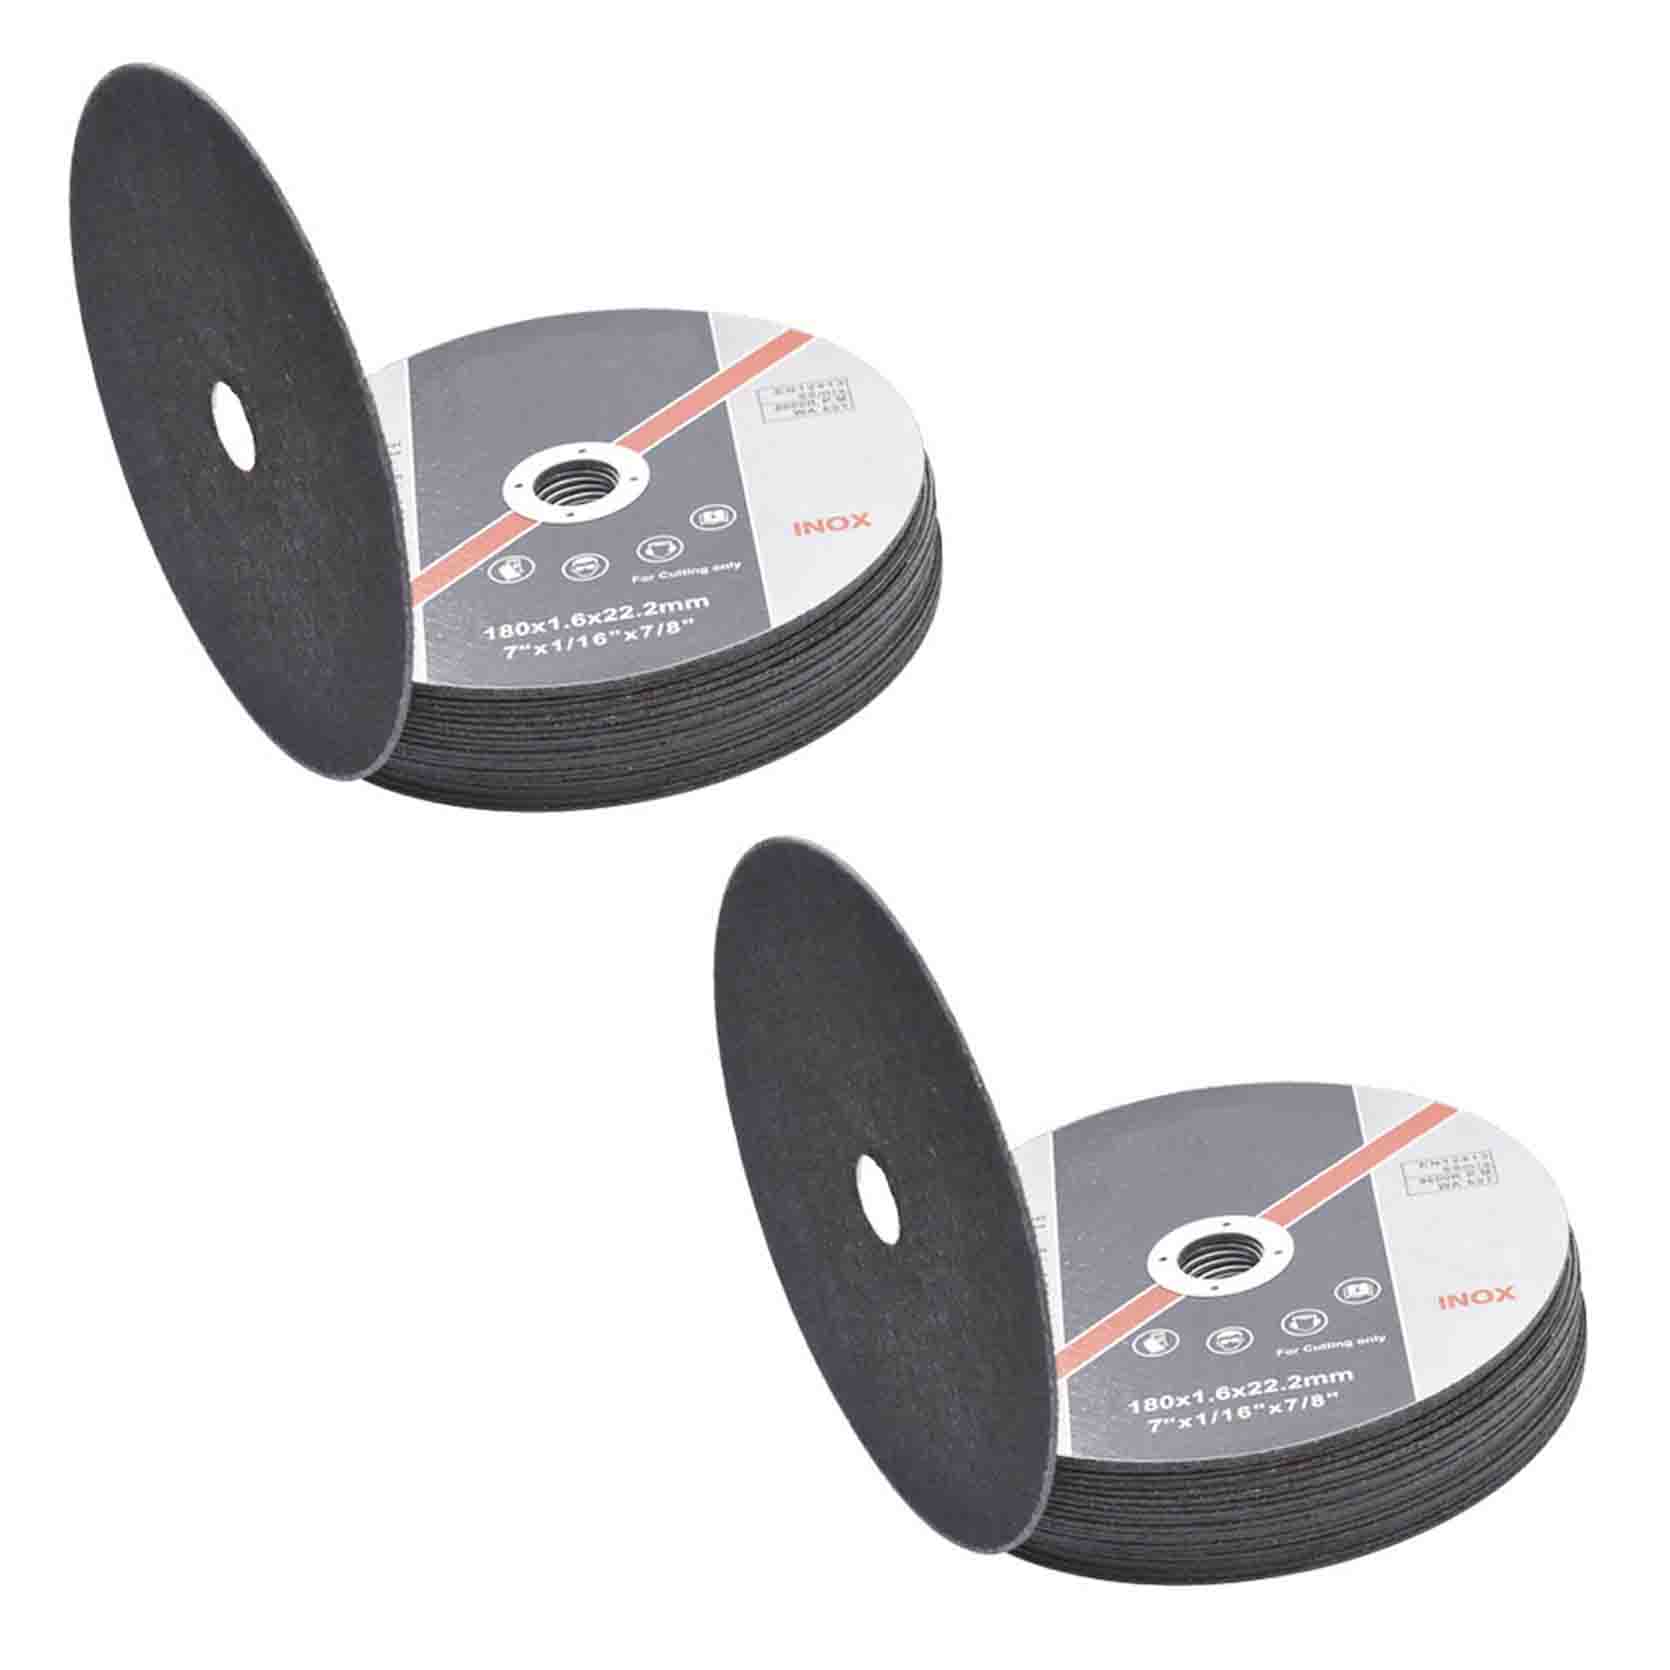 findmall 50 Pack 7"x1/16"x7/8" Cut-Off Wheel - Metal & Stainless Steel Cutting Discs FINDMALLPARTS